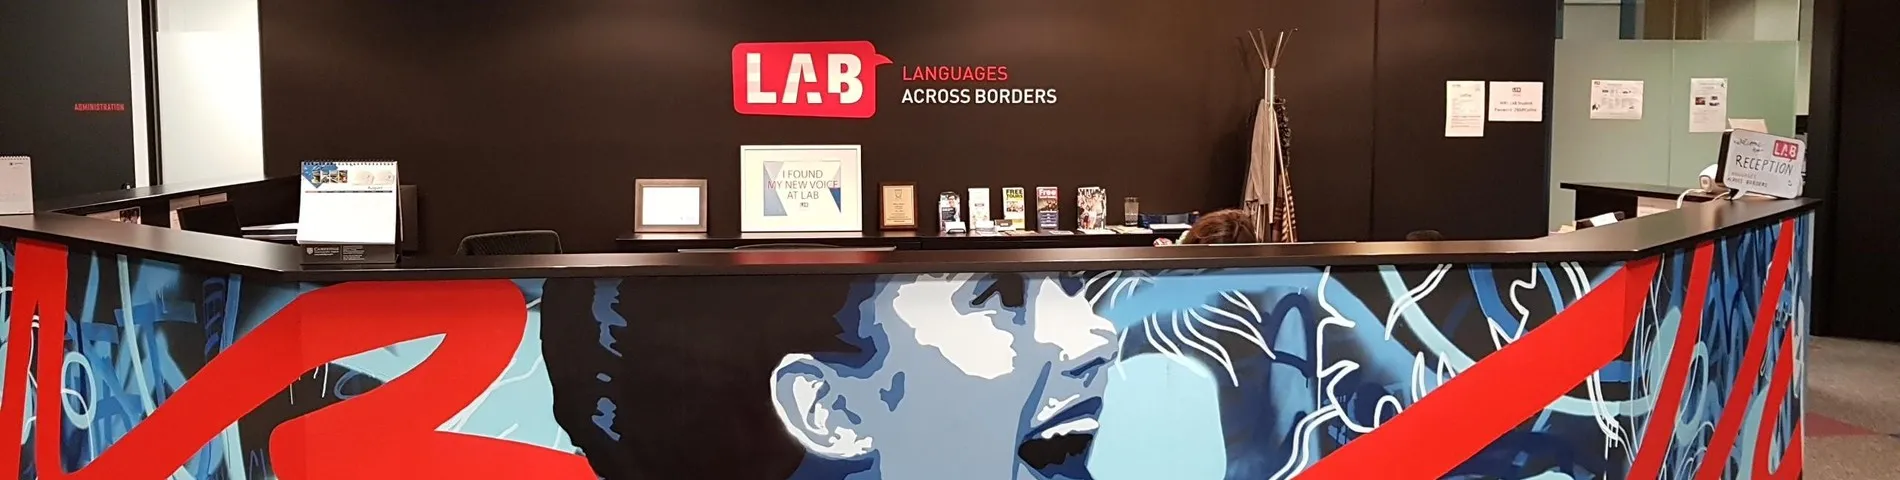 LAB - Languages Across Borders图片1